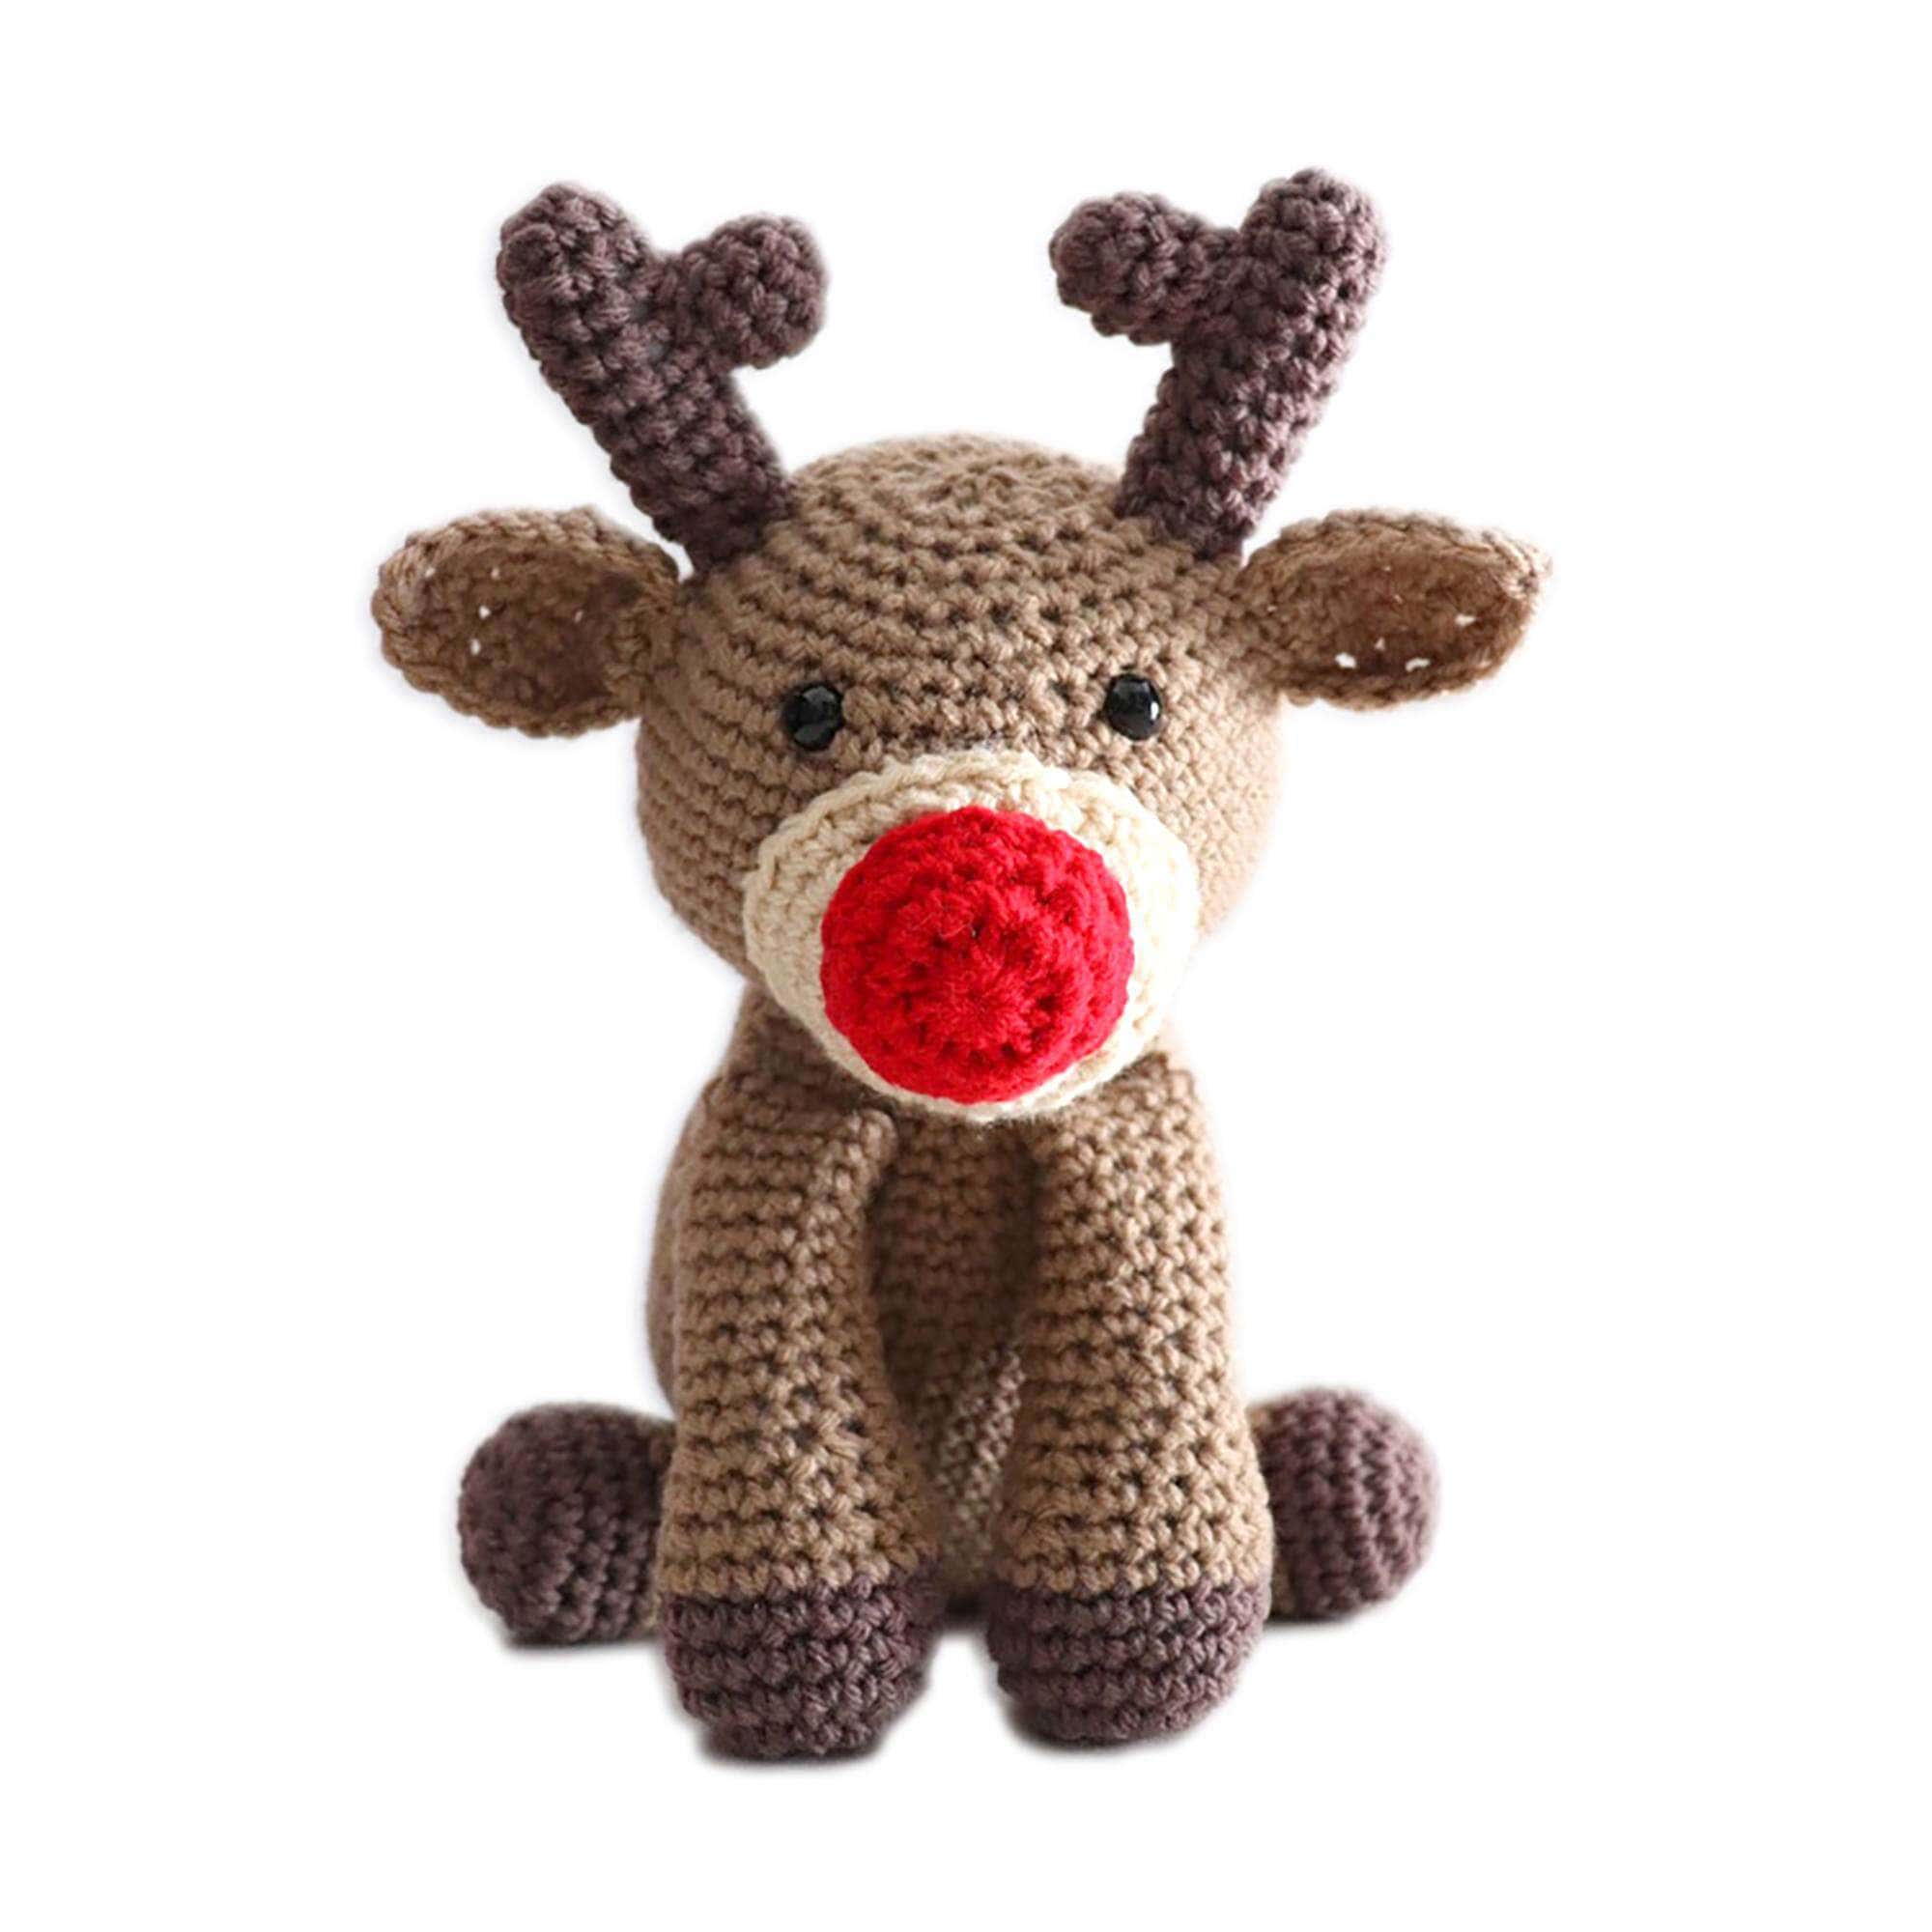 25 Free Crochet Stuffed Animal Patterns - Daisy Farm Crafts